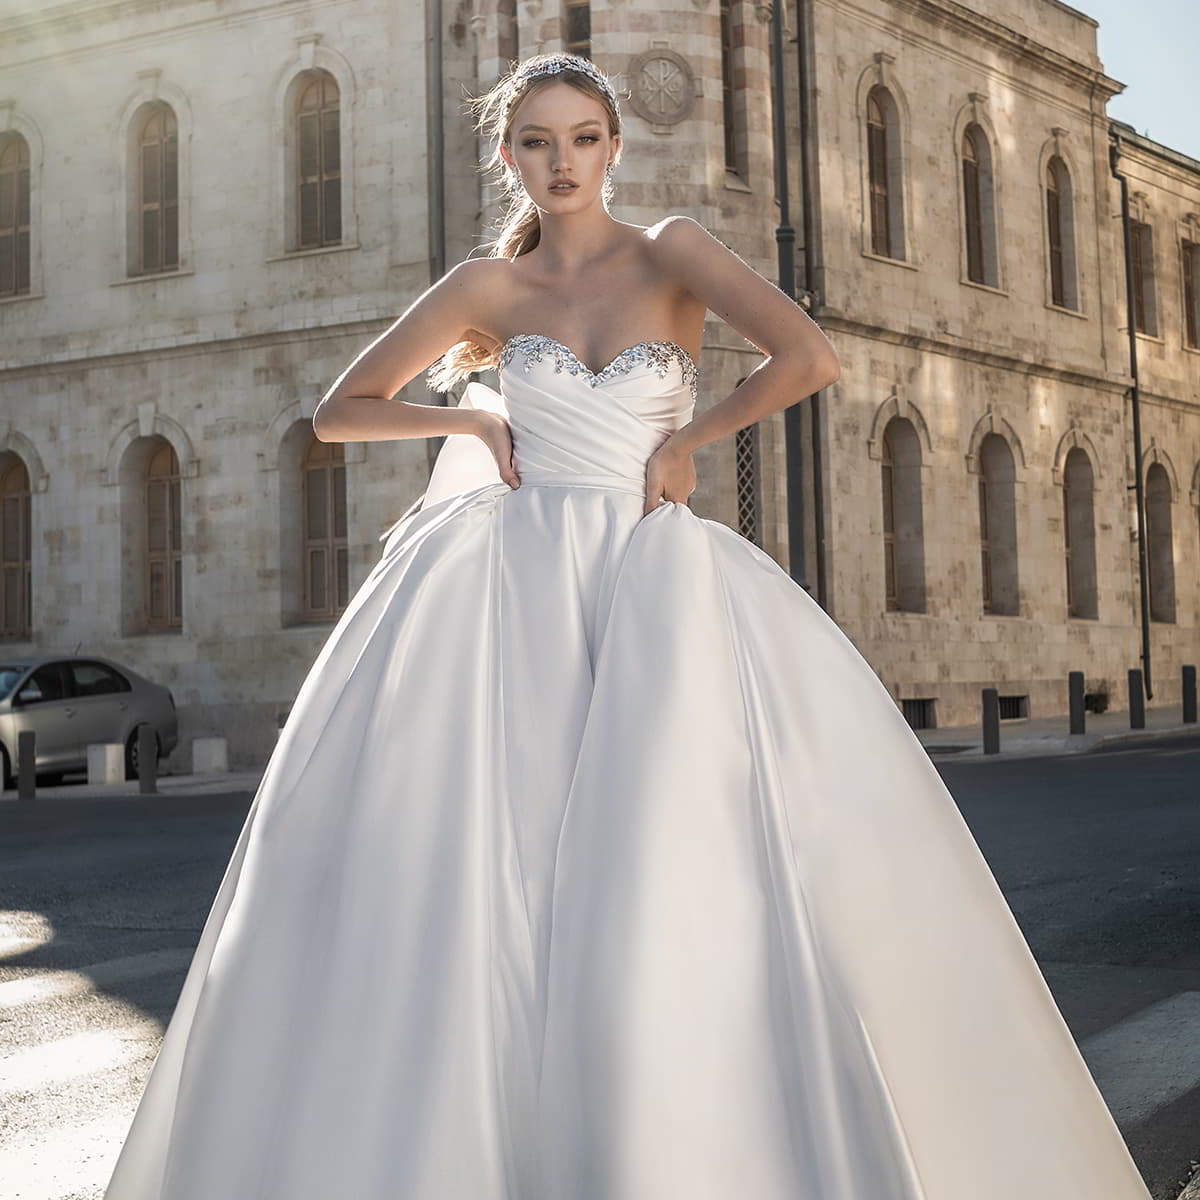 Stunning Pnina Tornai wedding gown